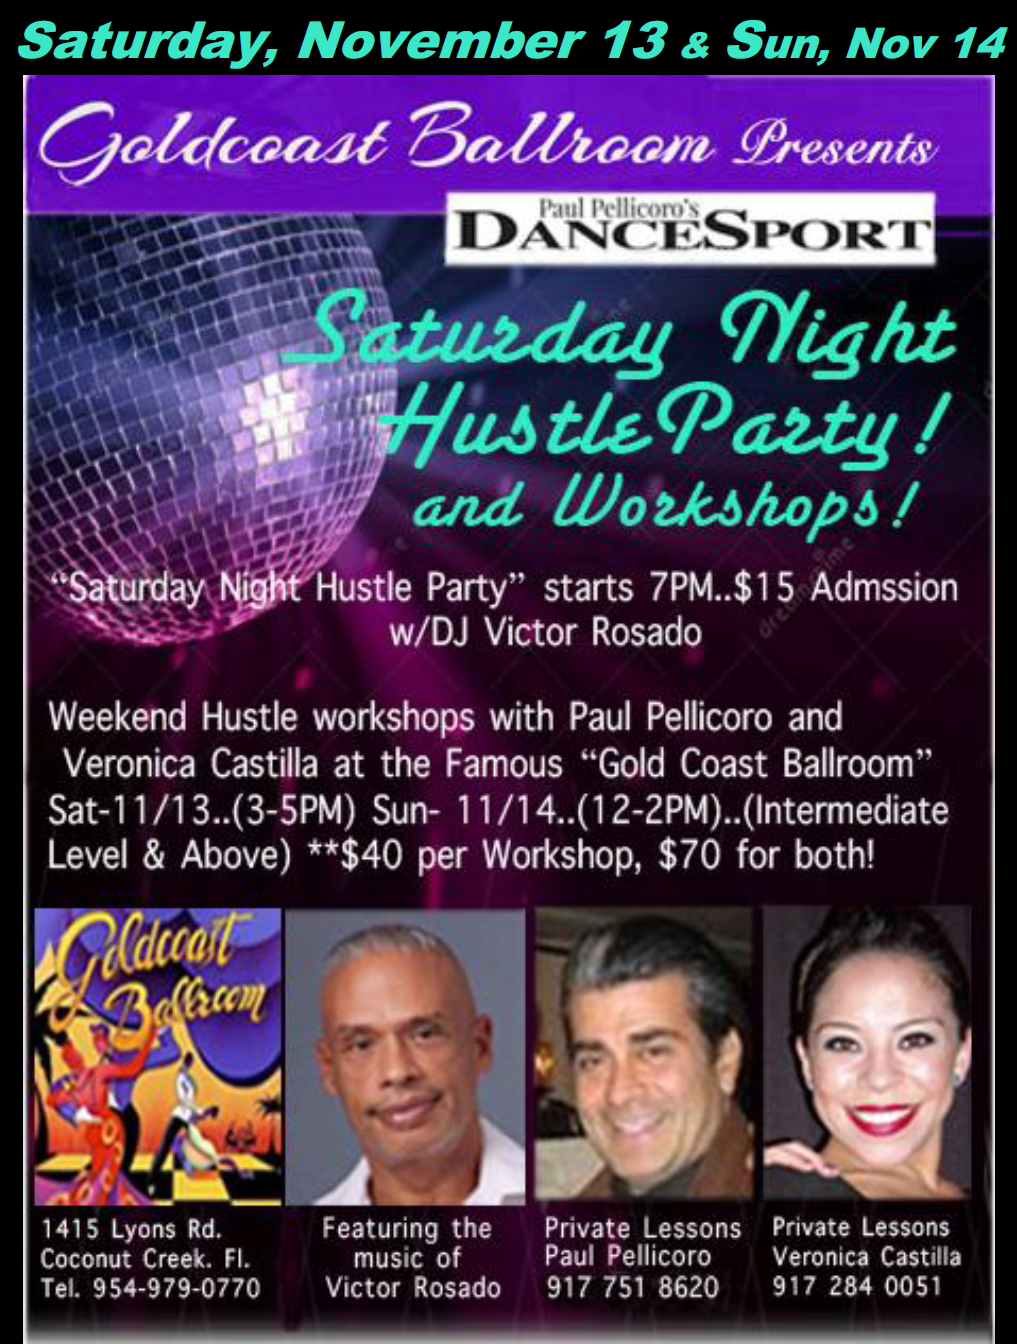 Saturday Night Hustle Party and Workshops - Sat Nov 13 & Sun Nov 14 with Paul Pellicoro, Veronica Castilla & Victor Rosado at Goldcoast Ballroom